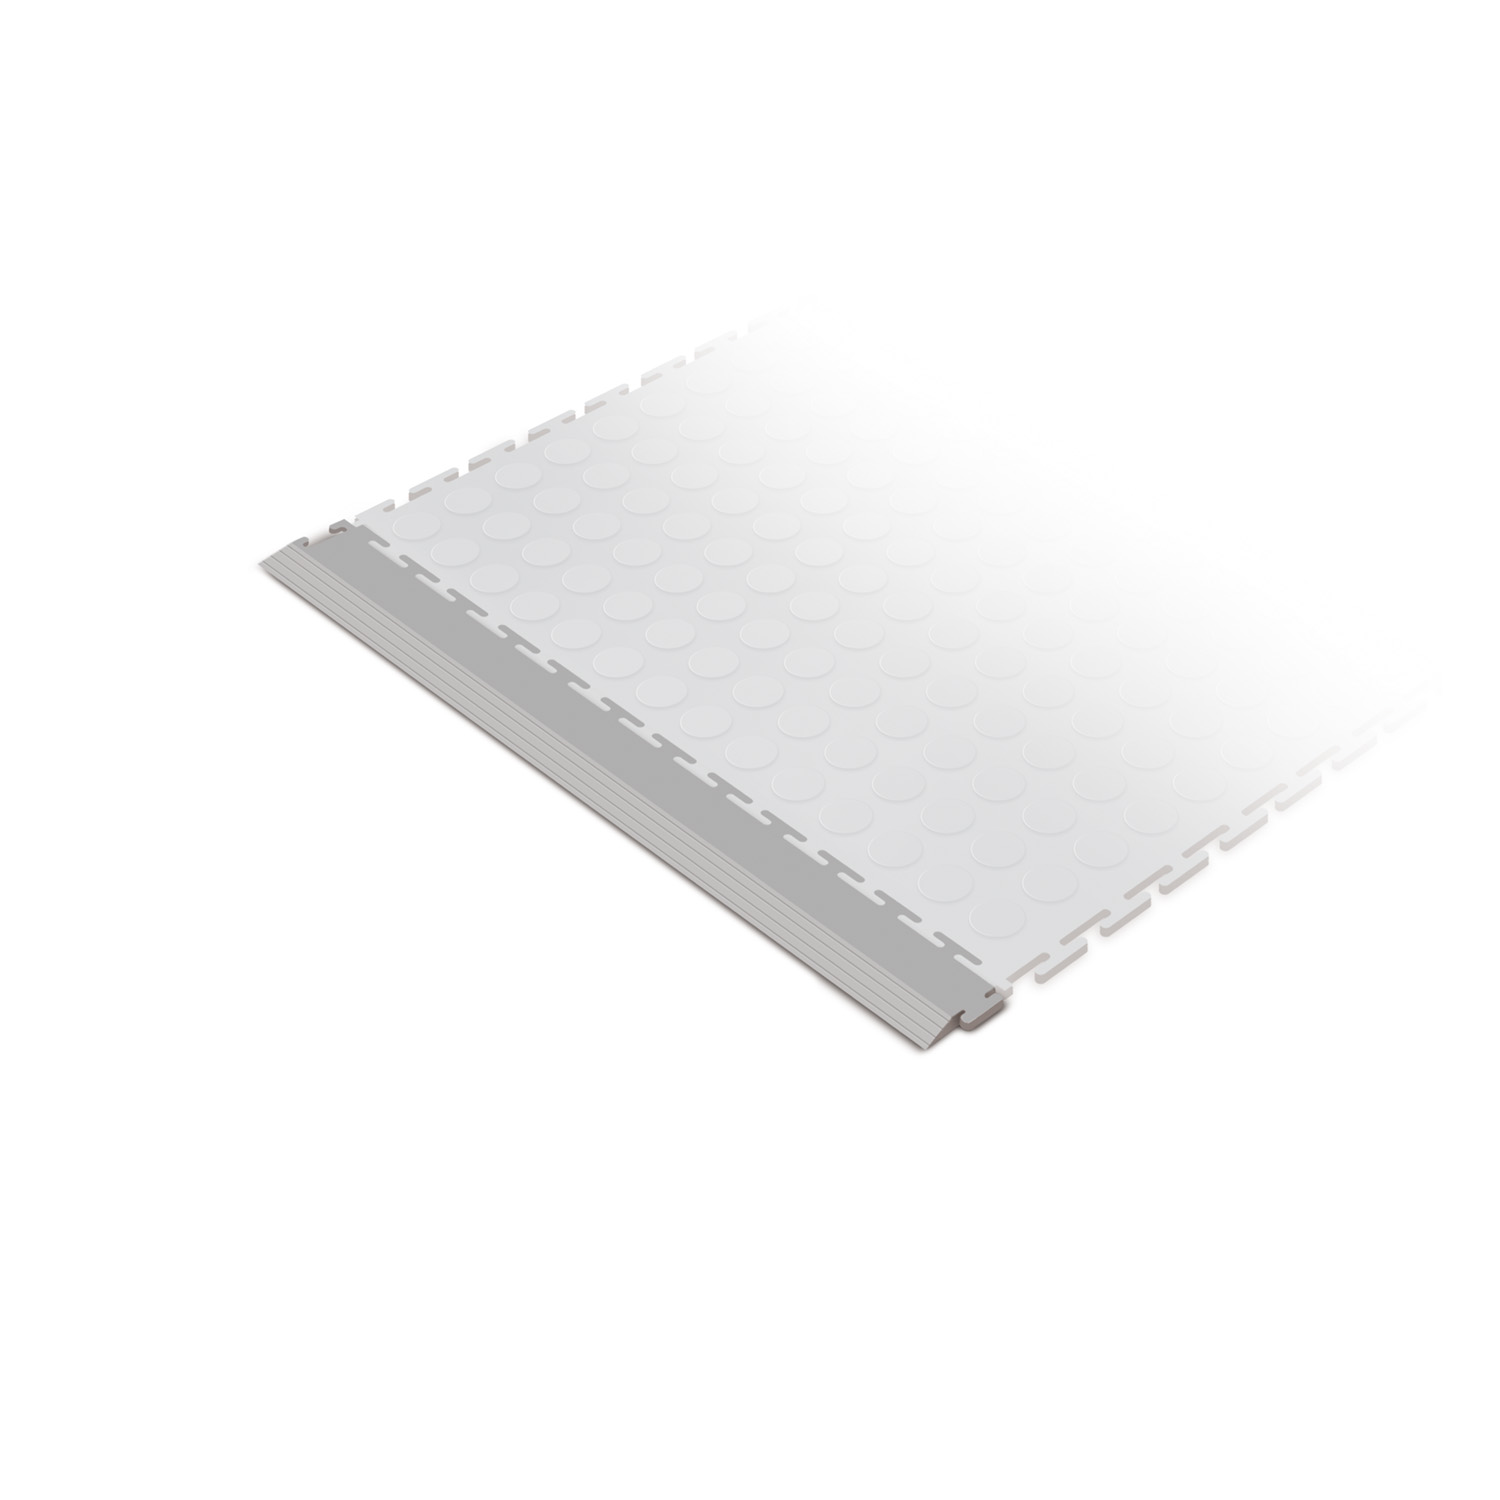 Standard edge ramp tile (light grey)